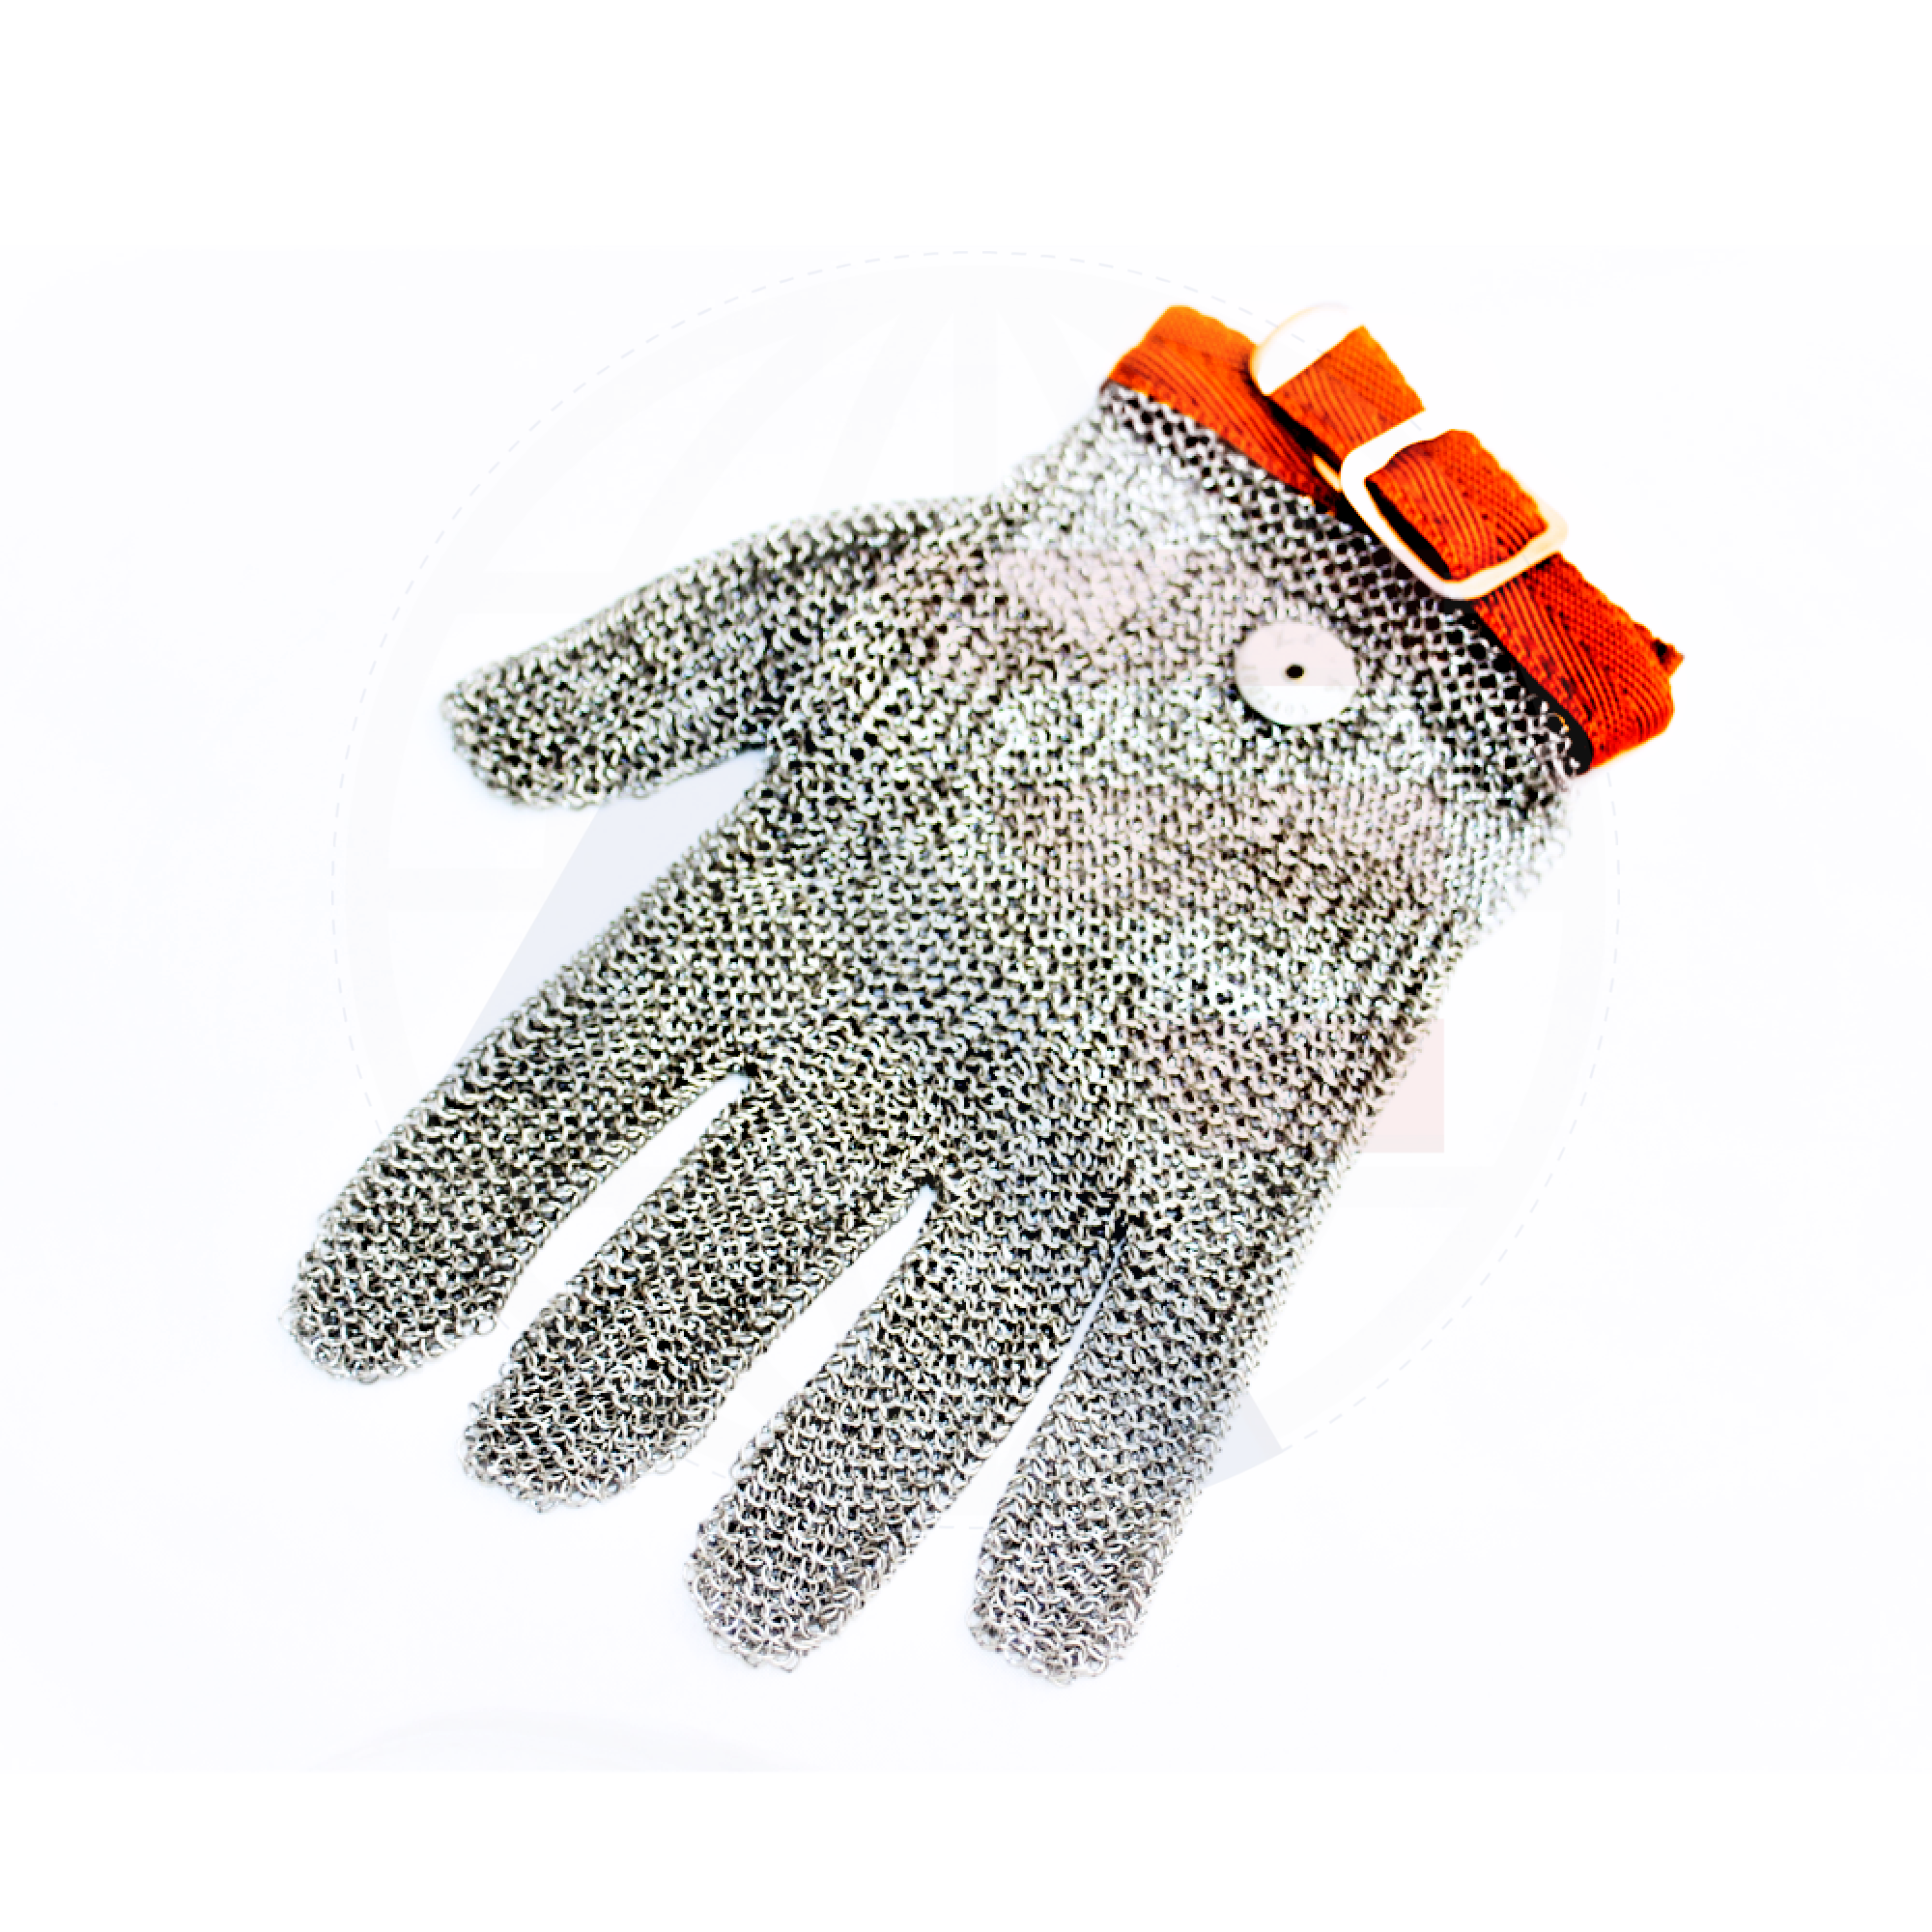 Chainmailglove Protective Safety Glove Xl